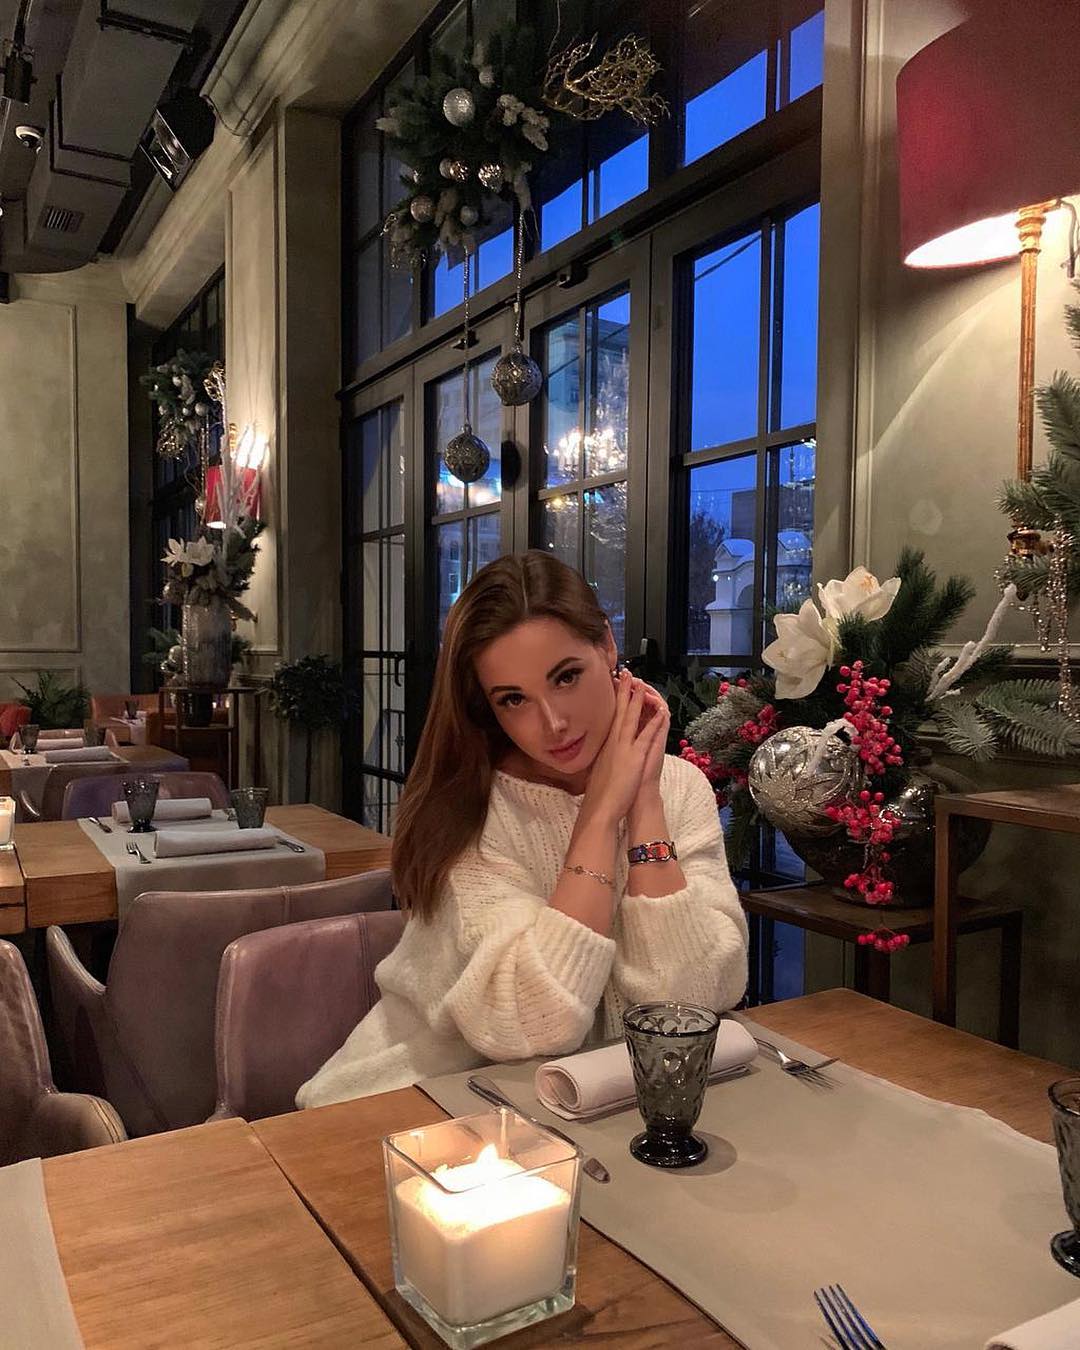 Russia Instagram influencer Ekaterina Karaglanova found dead in suitcase